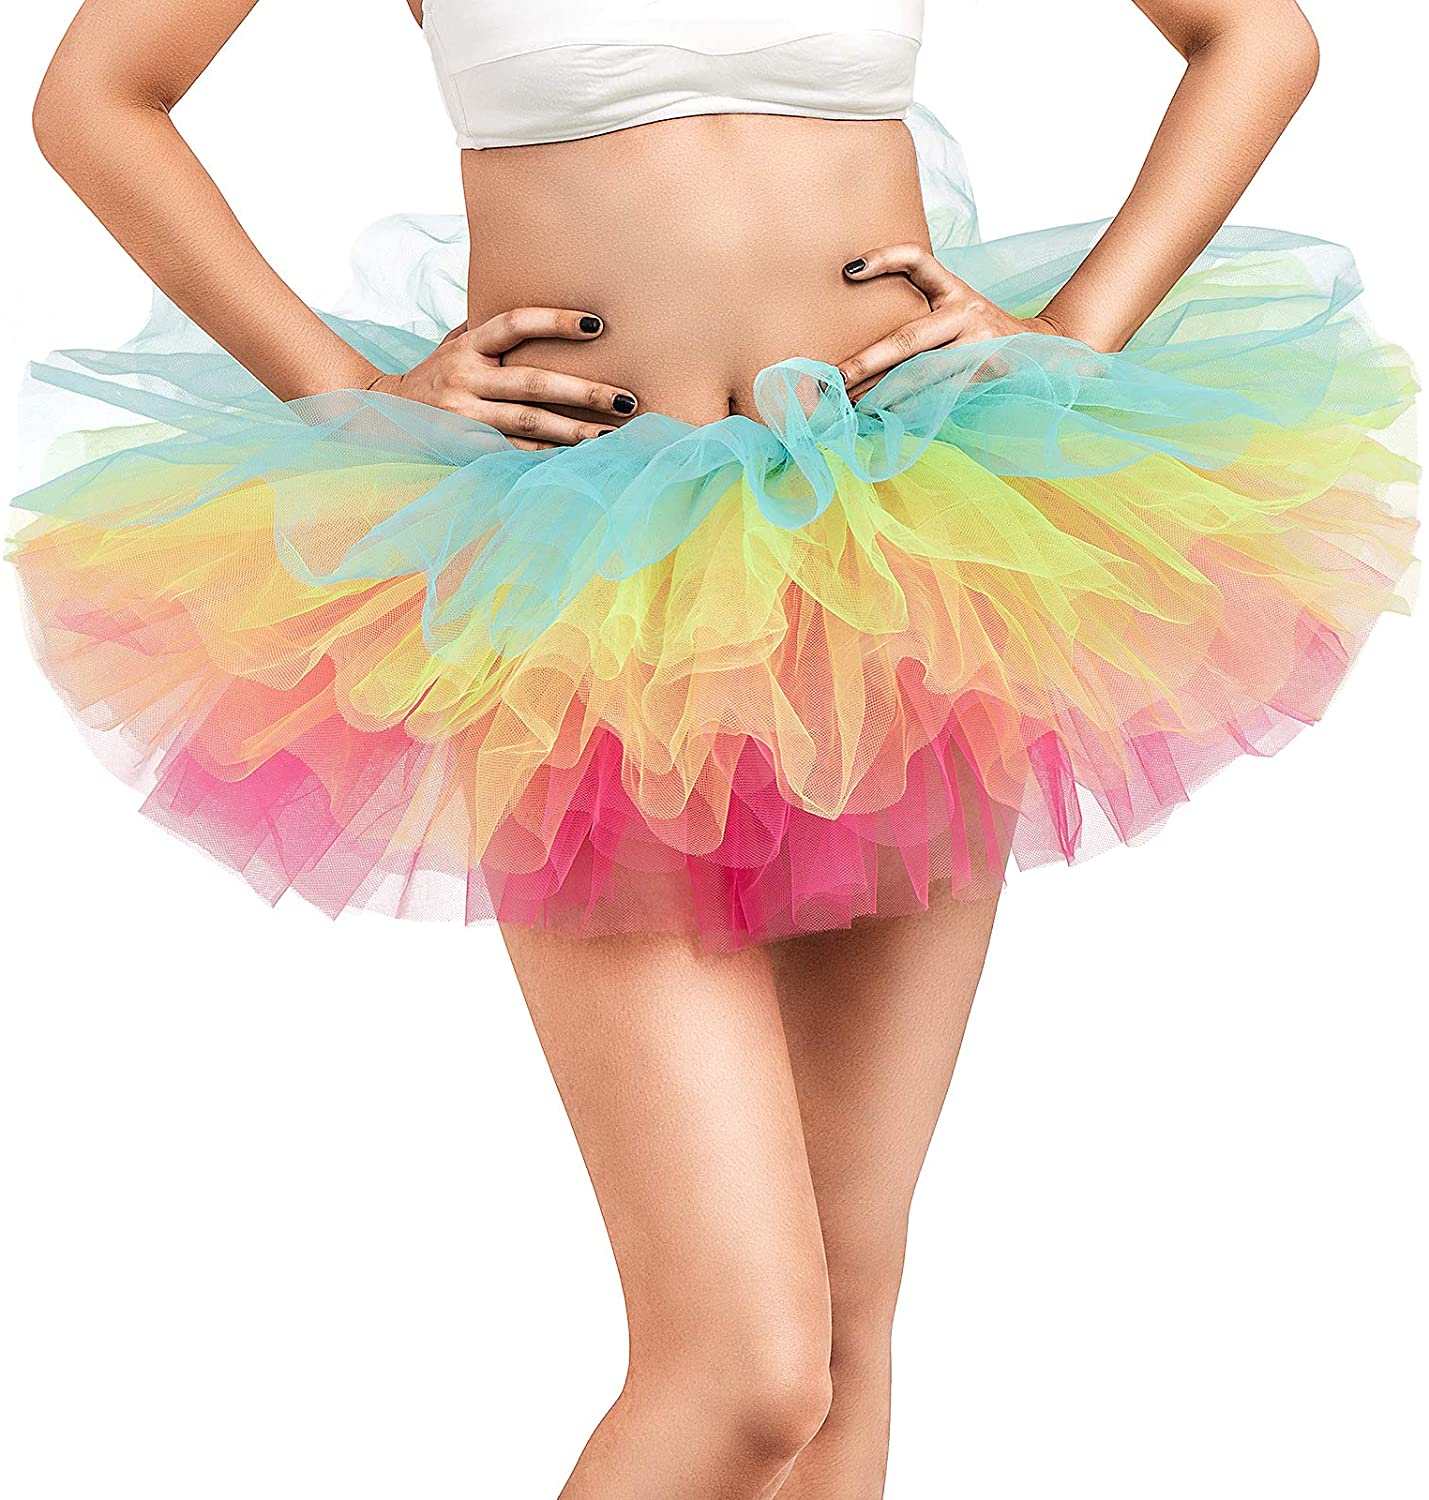 AU SELLER Adults Teens Ballet Dance Party Costume 5 Layered Tutu Skirt da017 